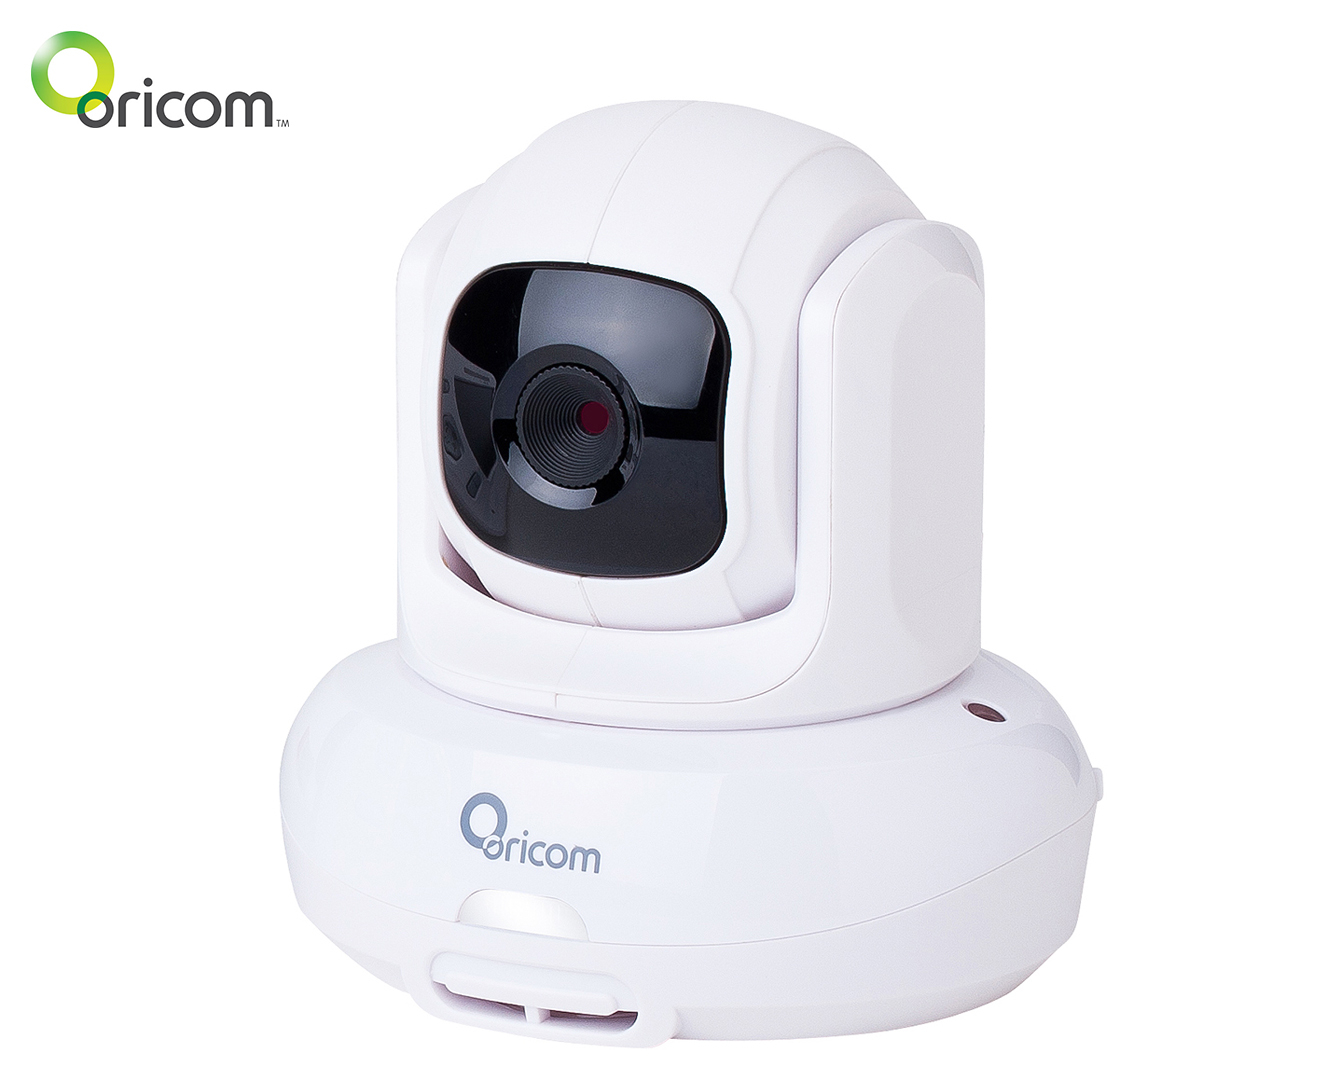 oricom baby monitor target